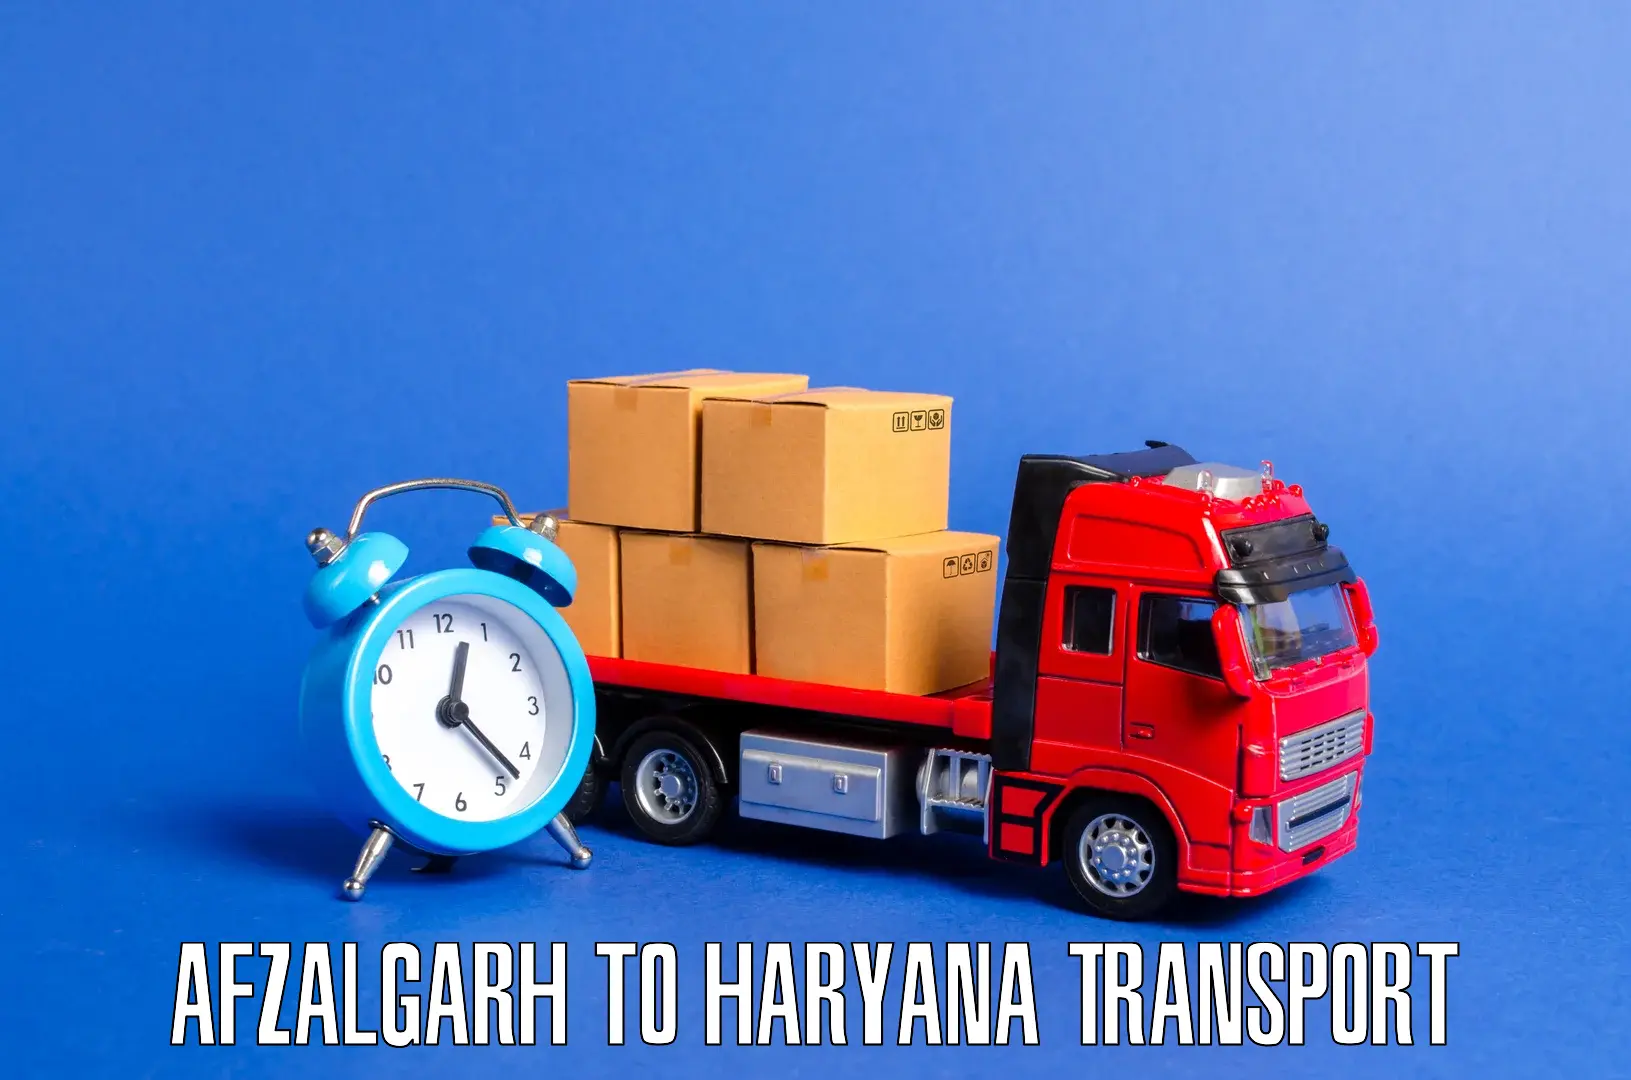 Pick up transport service Afzalgarh to Hisar